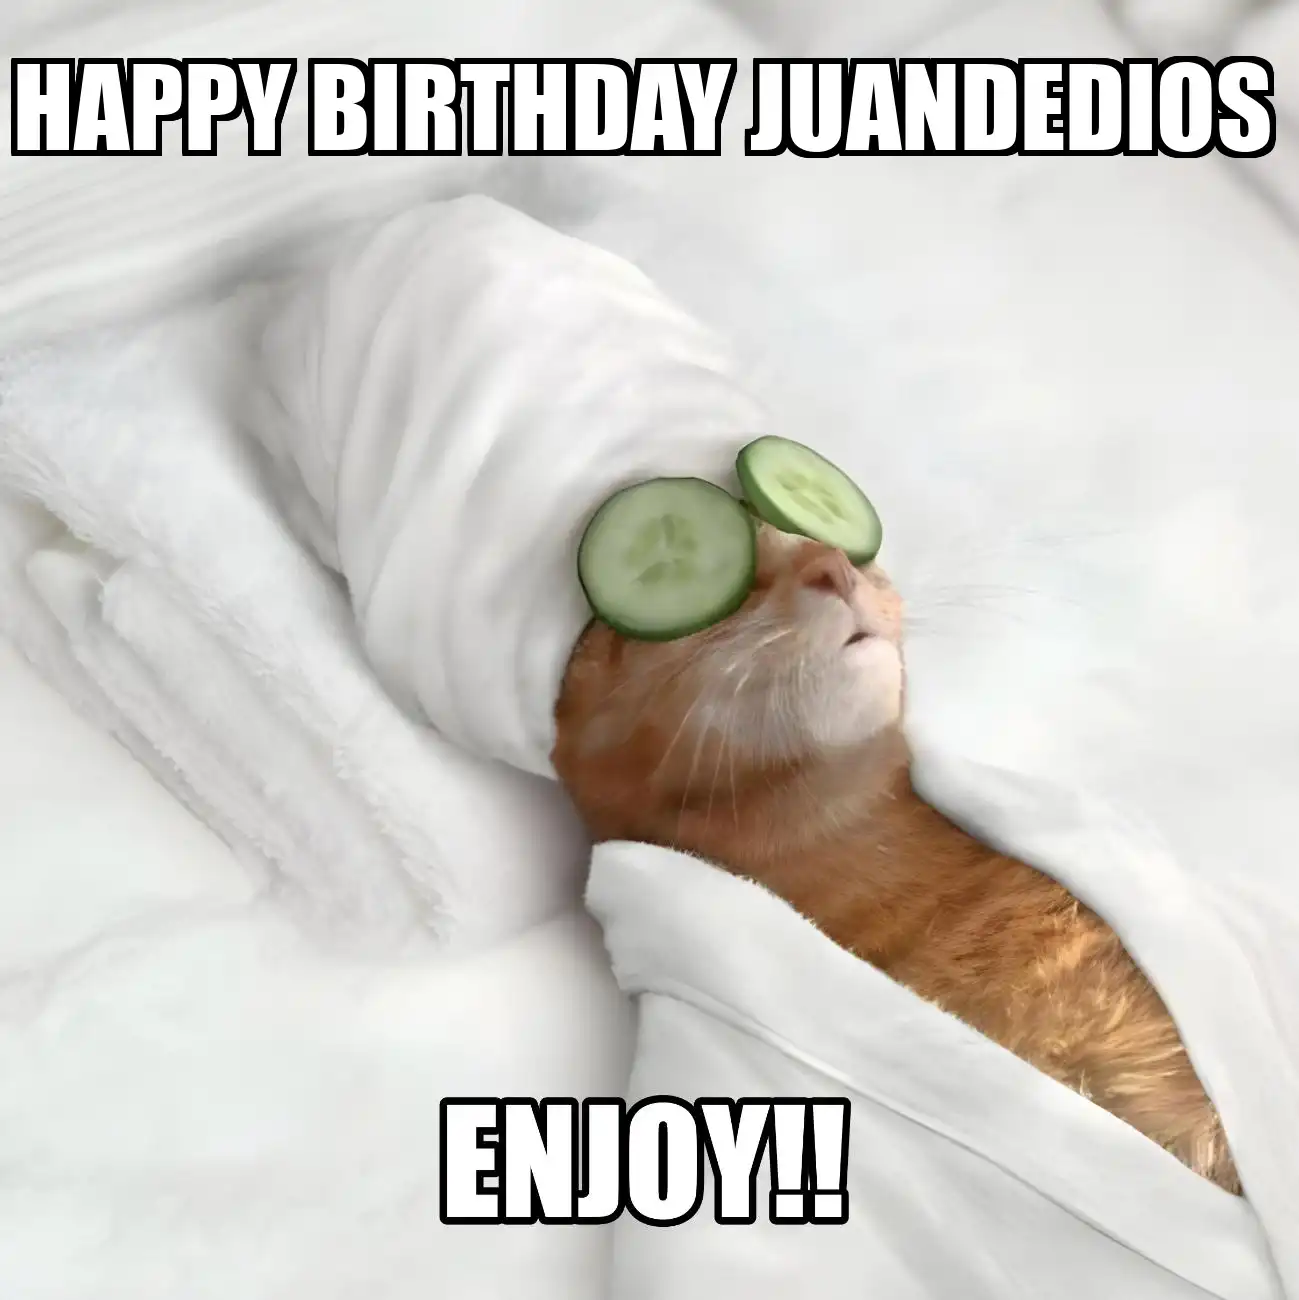 Happy Birthday Juandedios Enjoy Cat Meme